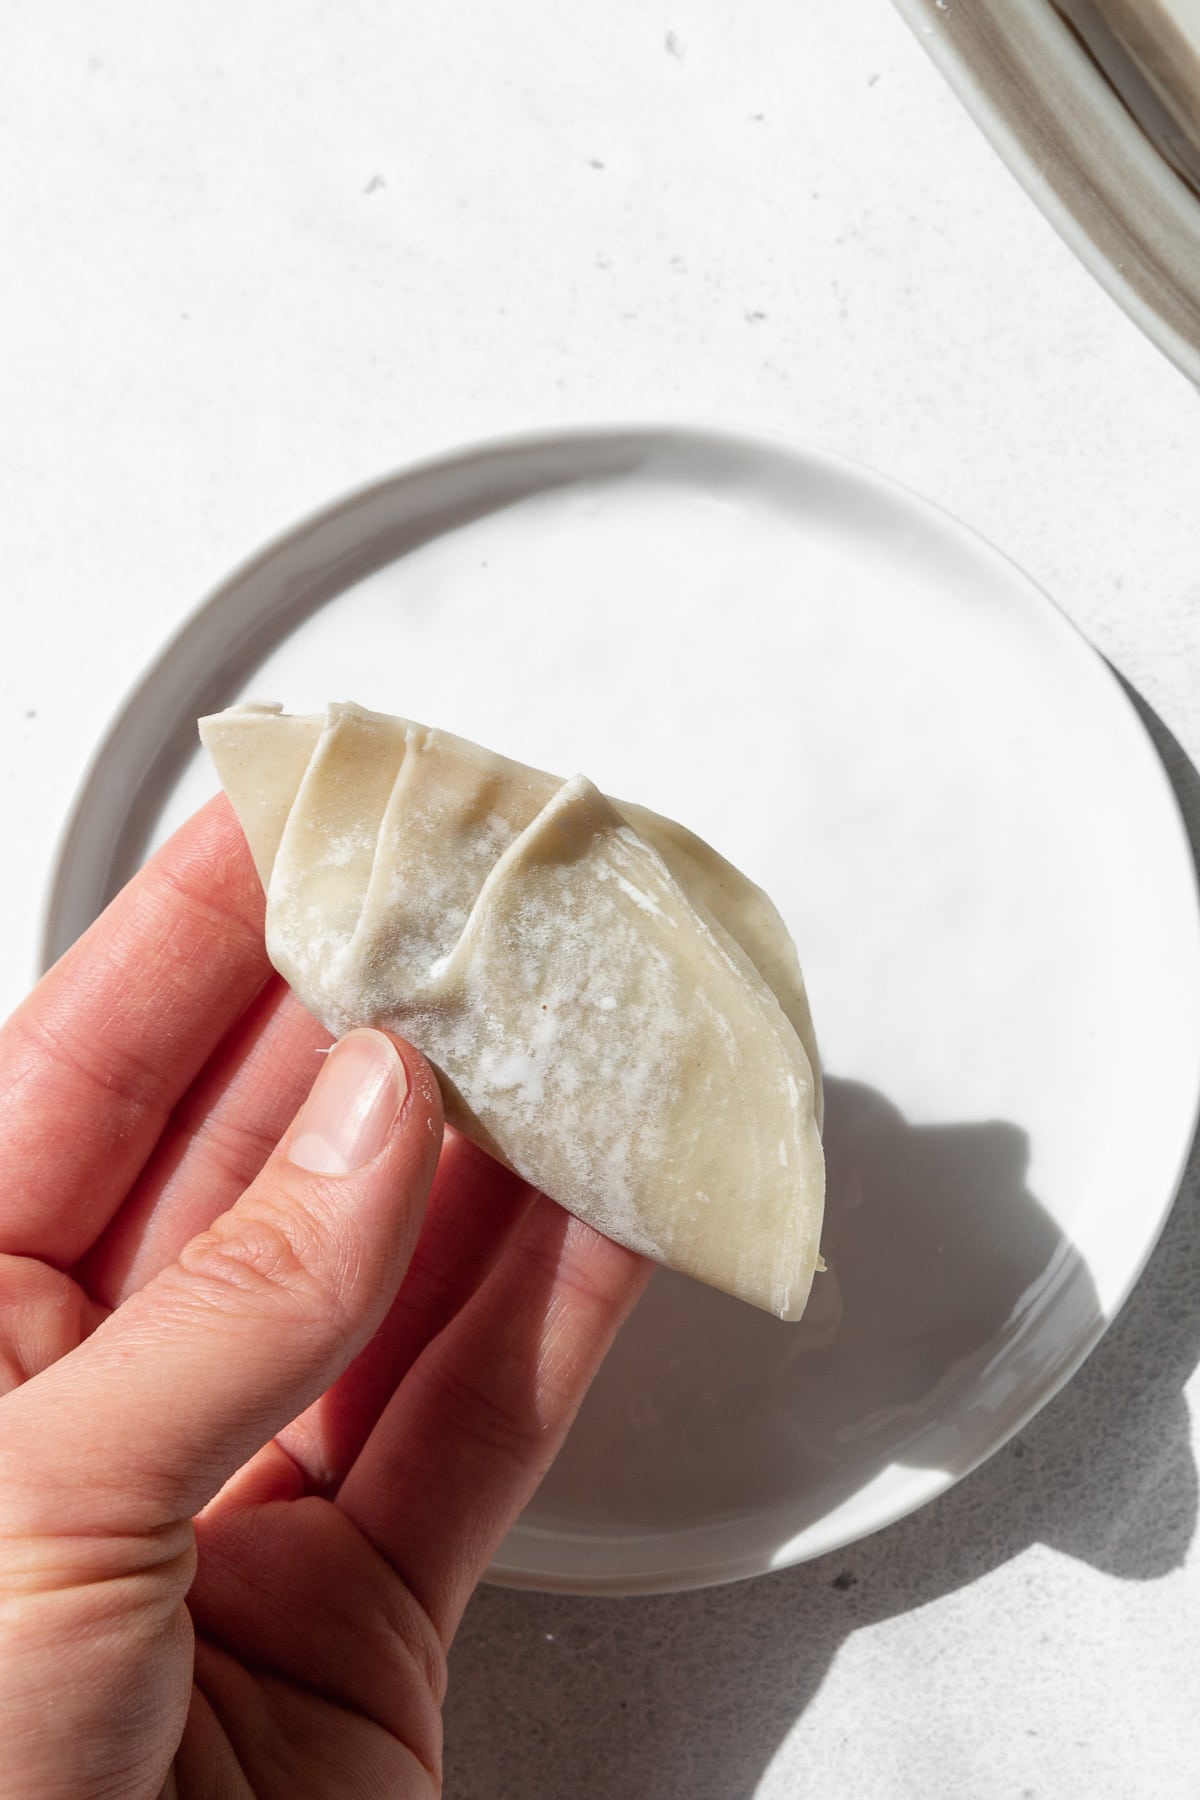 Make pleats on the dumpling wrapper using your fingers.